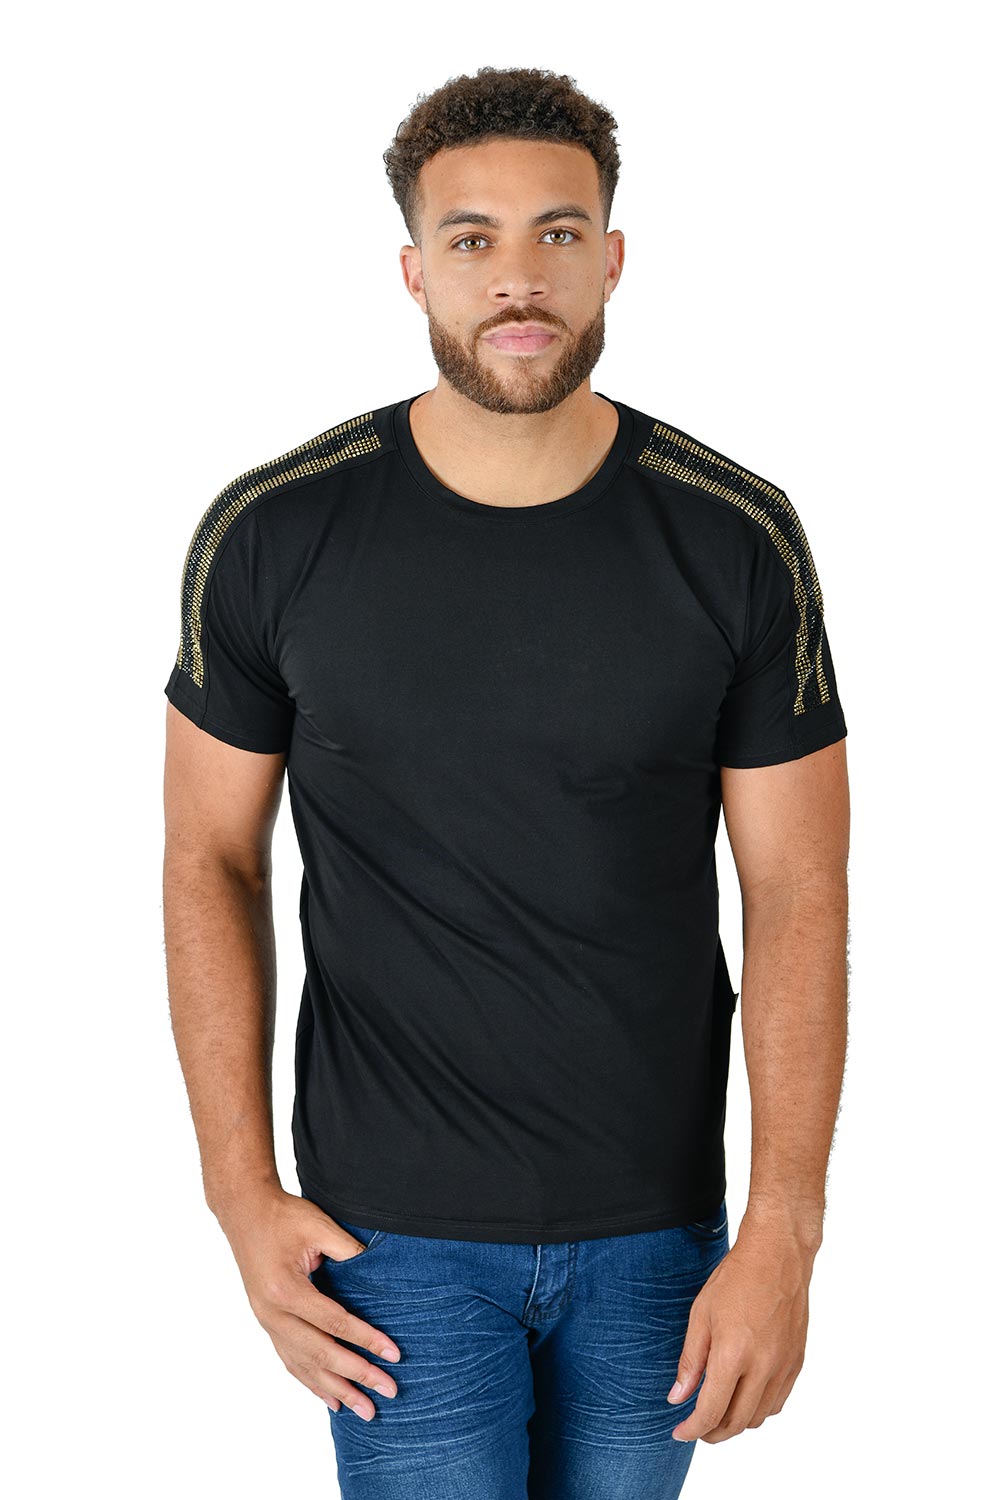 Barabas Men's Gold Rhinestone Black Crew Neck T-shirts ST942